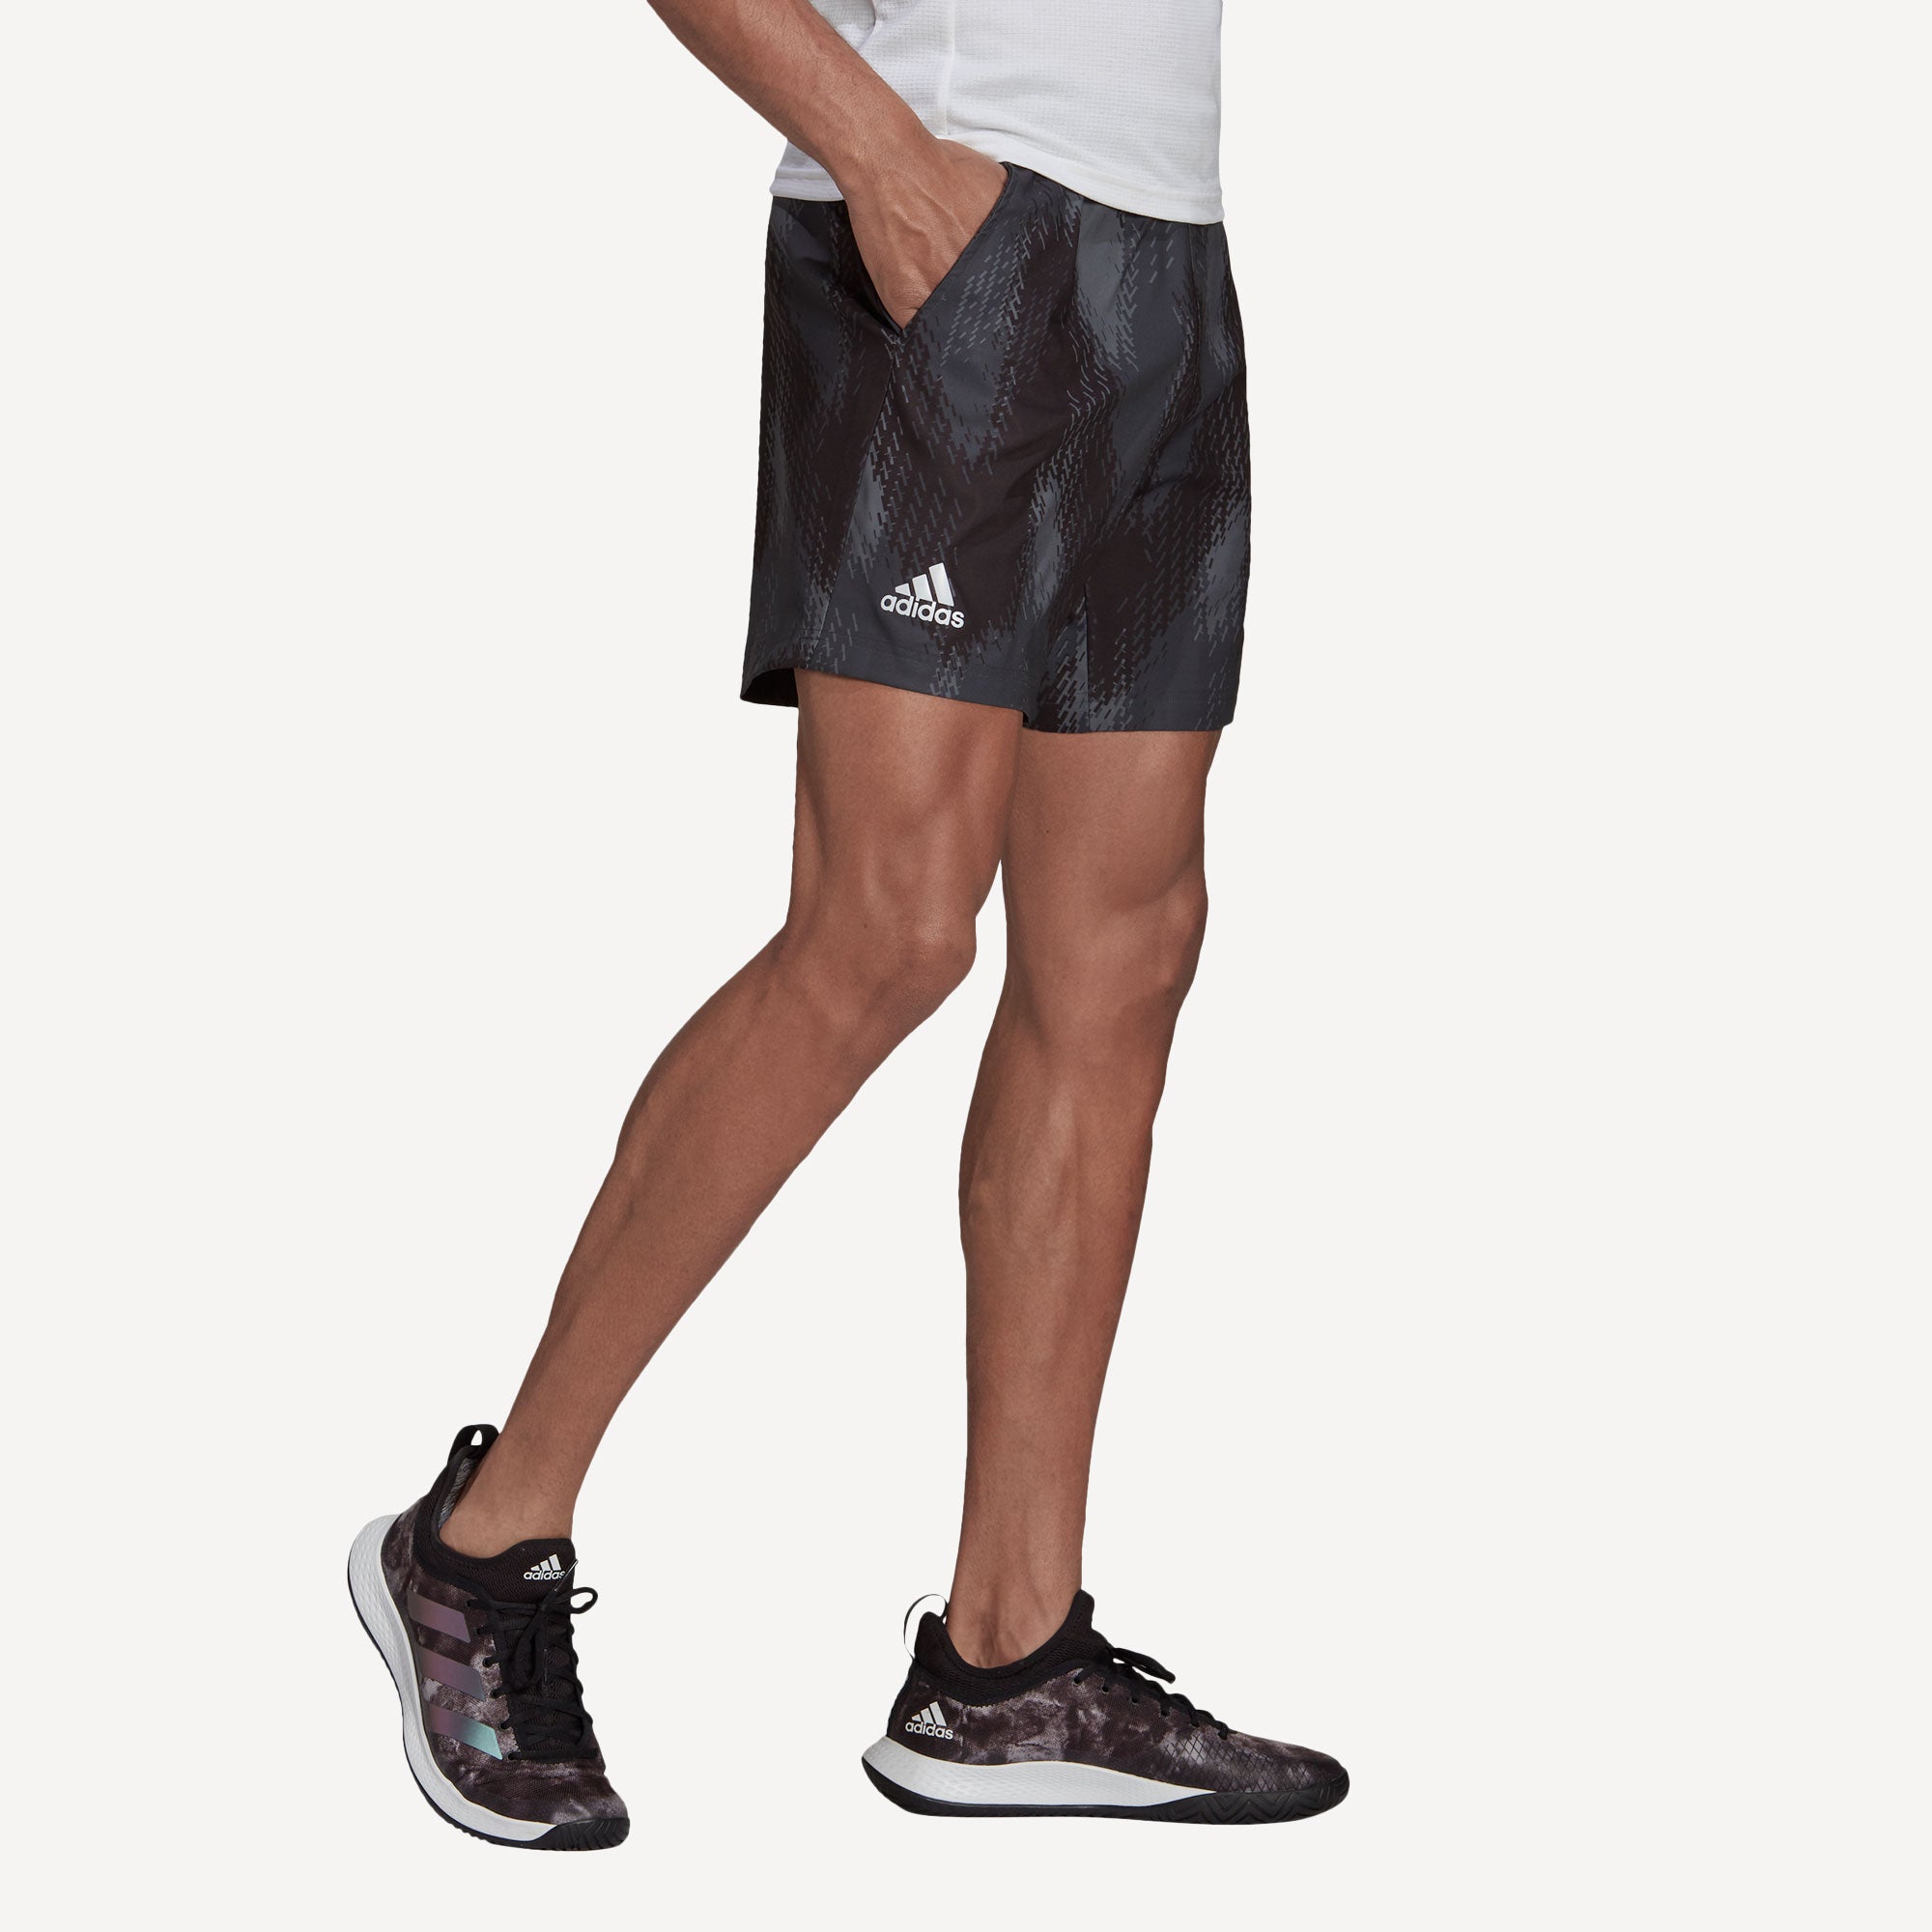 adidas Primeblue Men's Printed 7-Inch Tennis Shorts Grey (3)